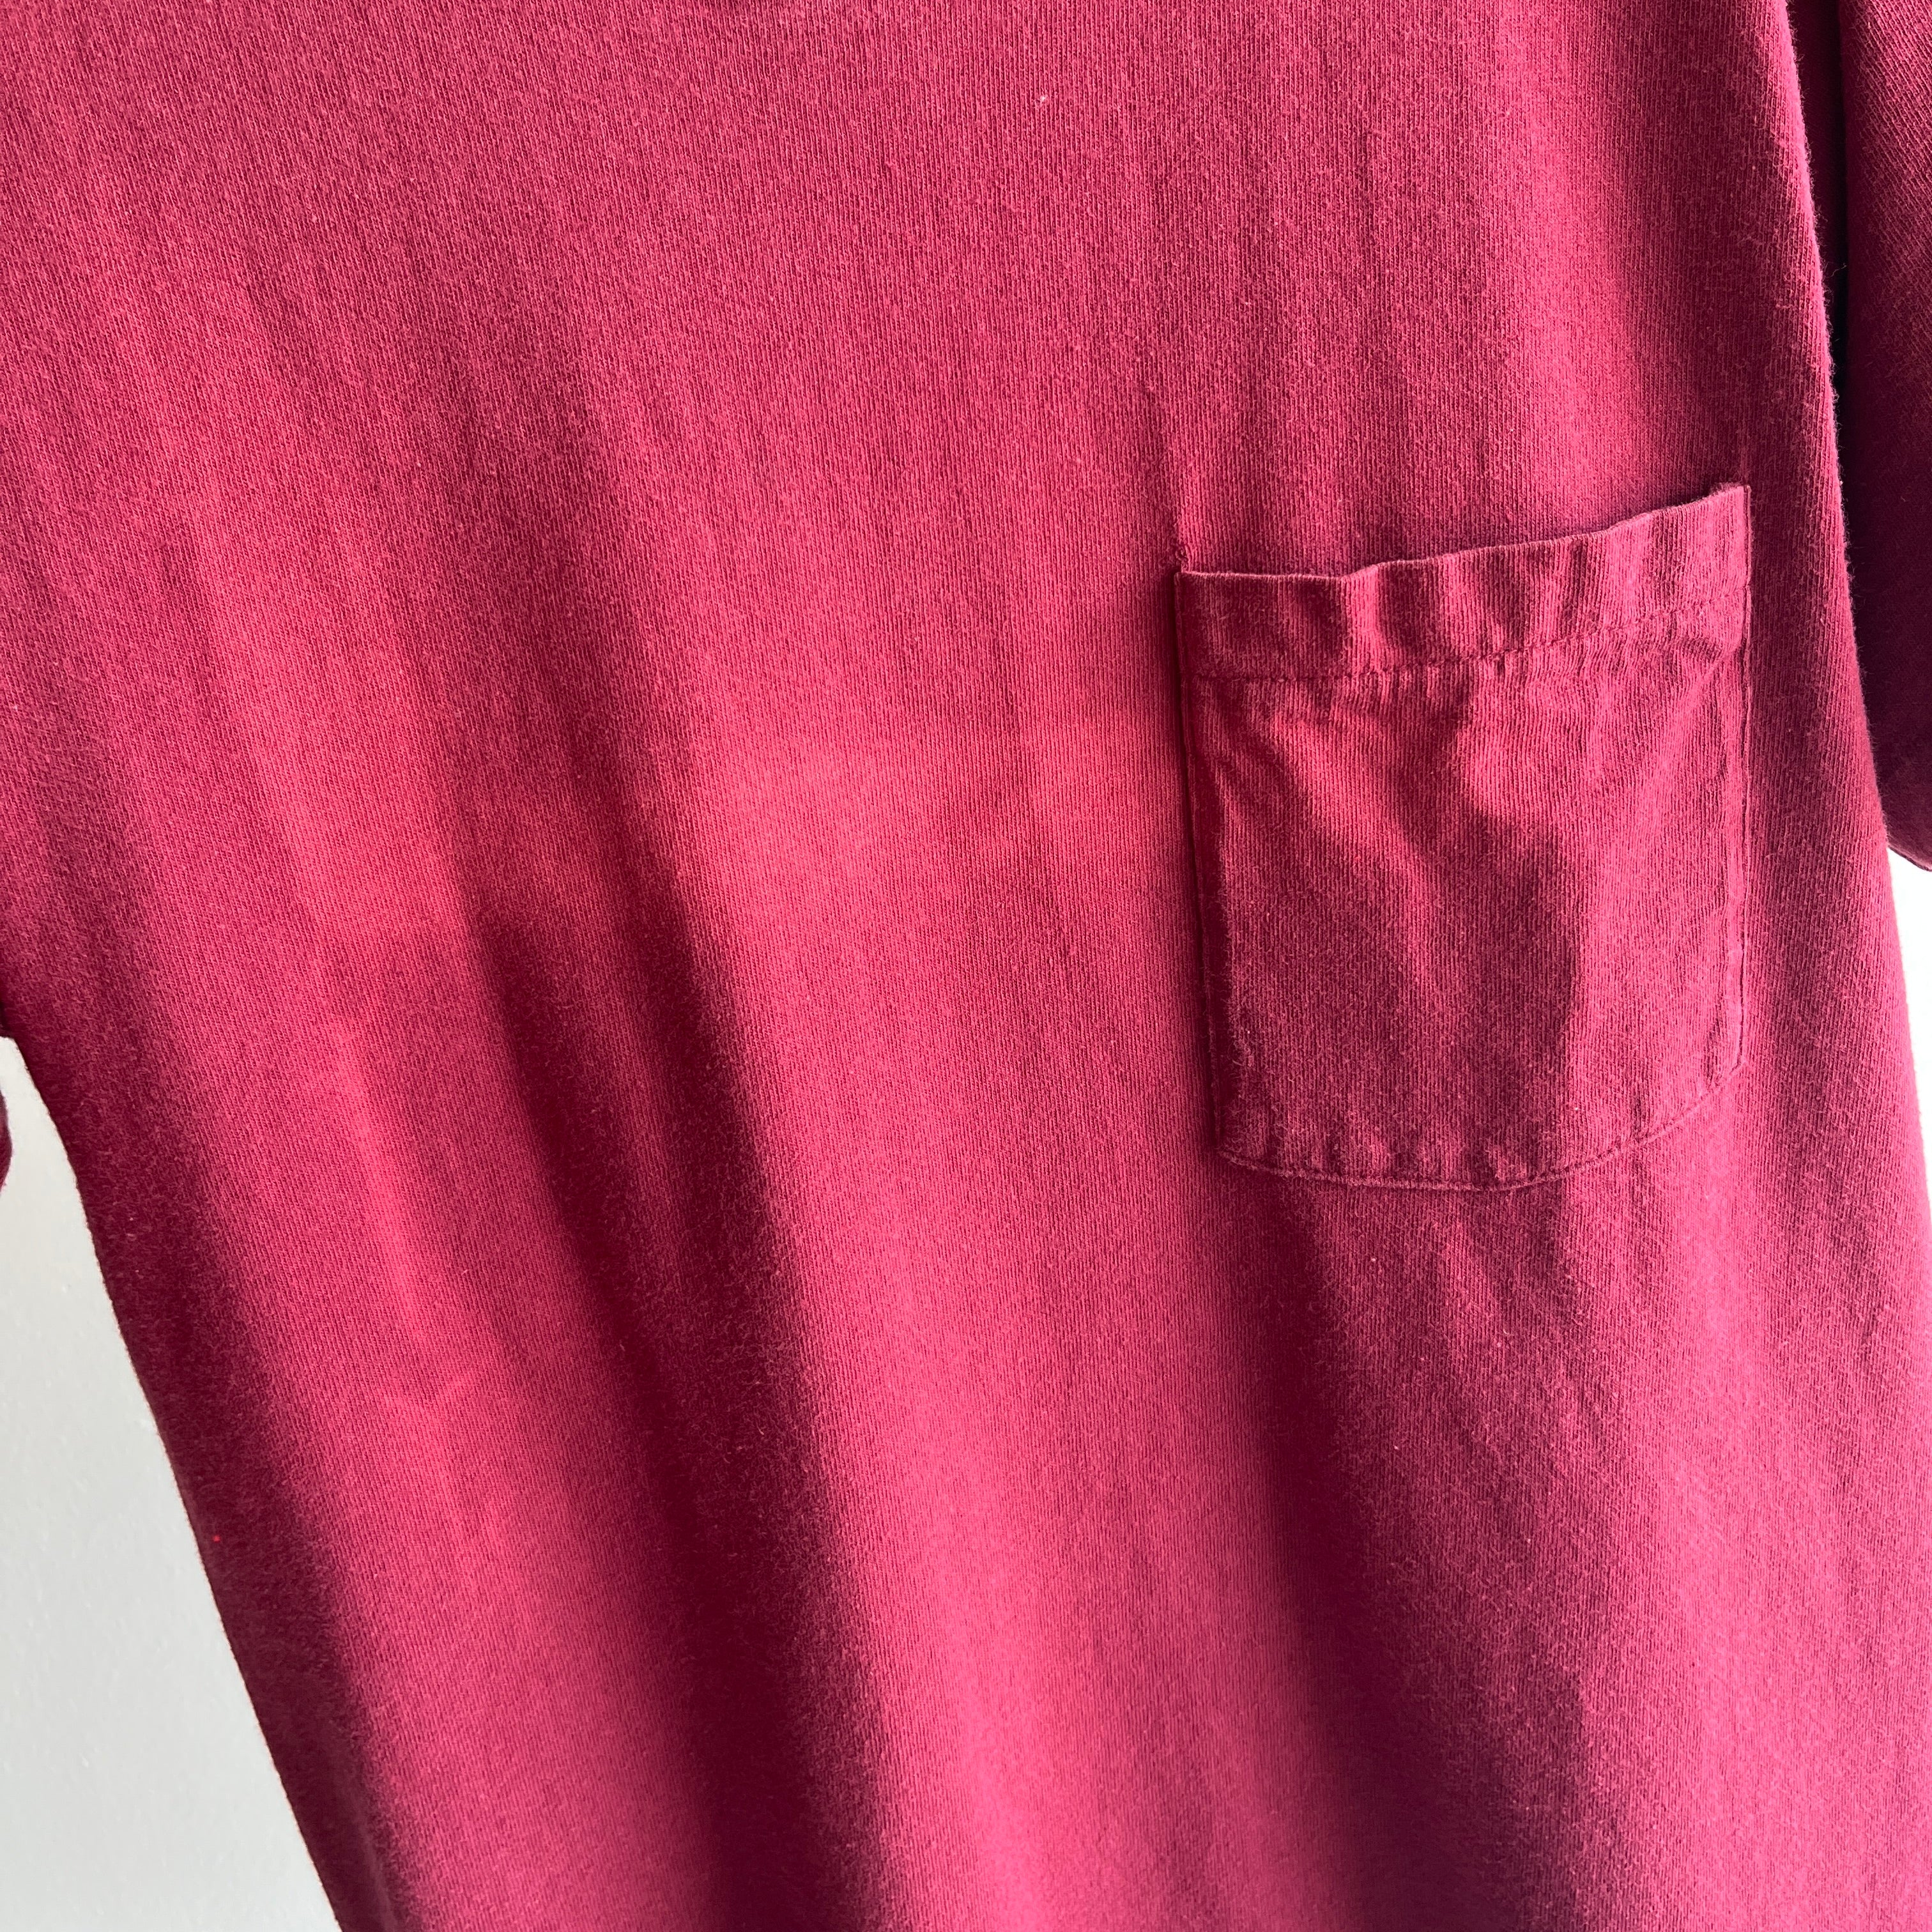 1980s Sun Faded Burgundy/ Merlot/ Cabernet FOTL Pocket T-Shirt - Cotton